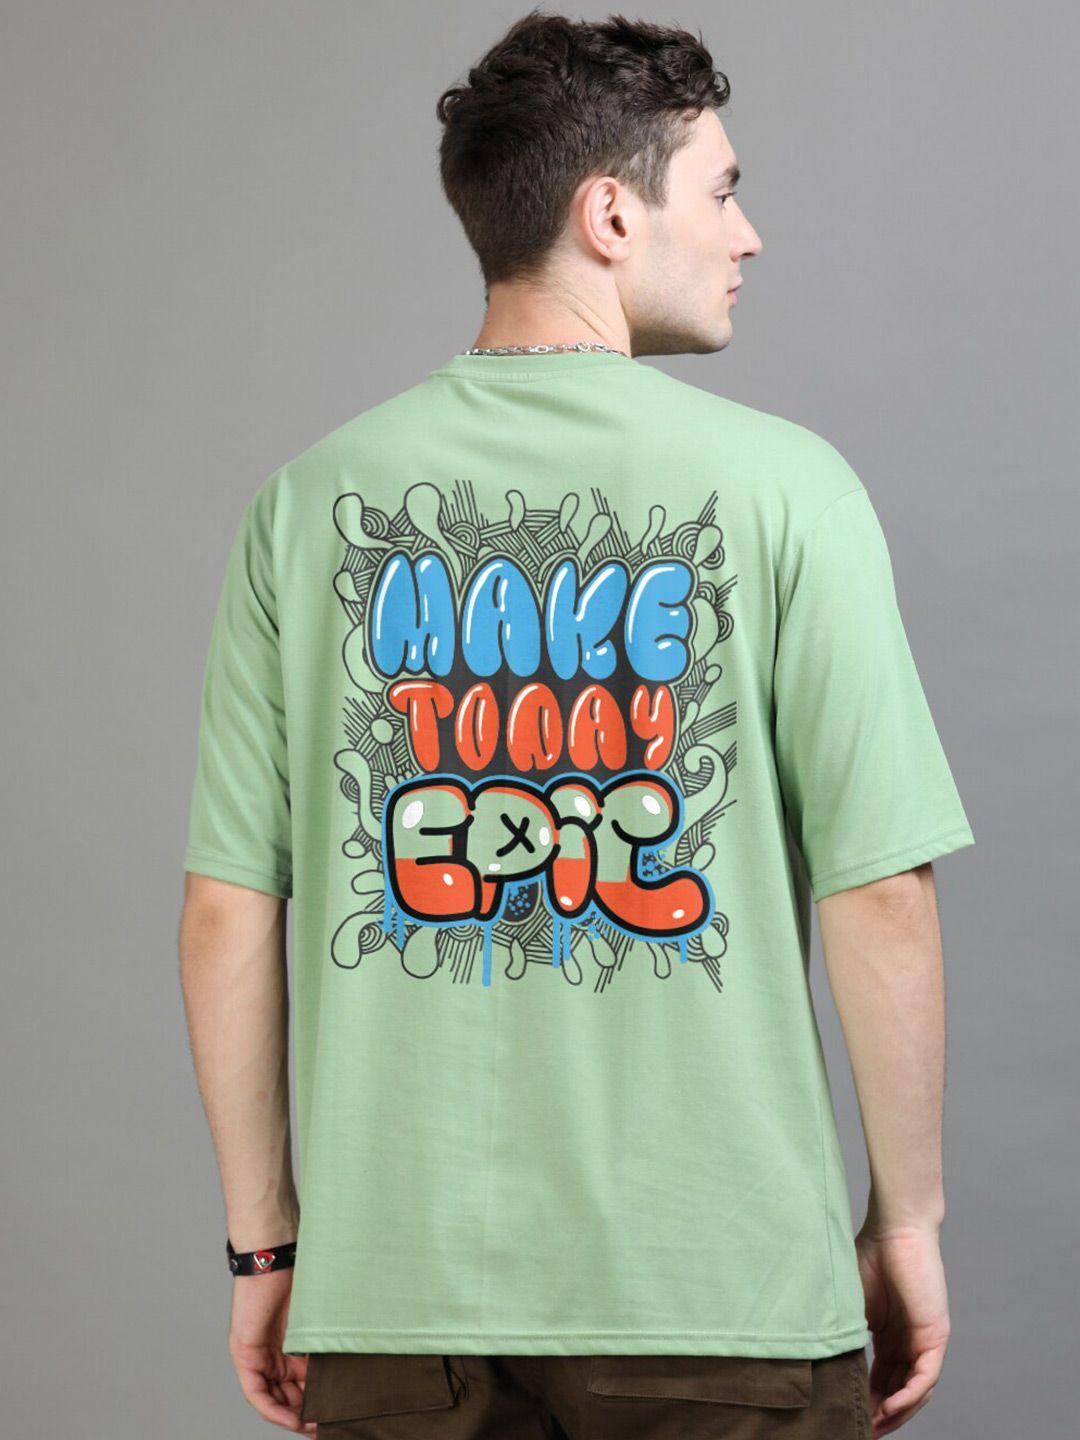 bushirt typography printed pure cotton oversized t-shirt